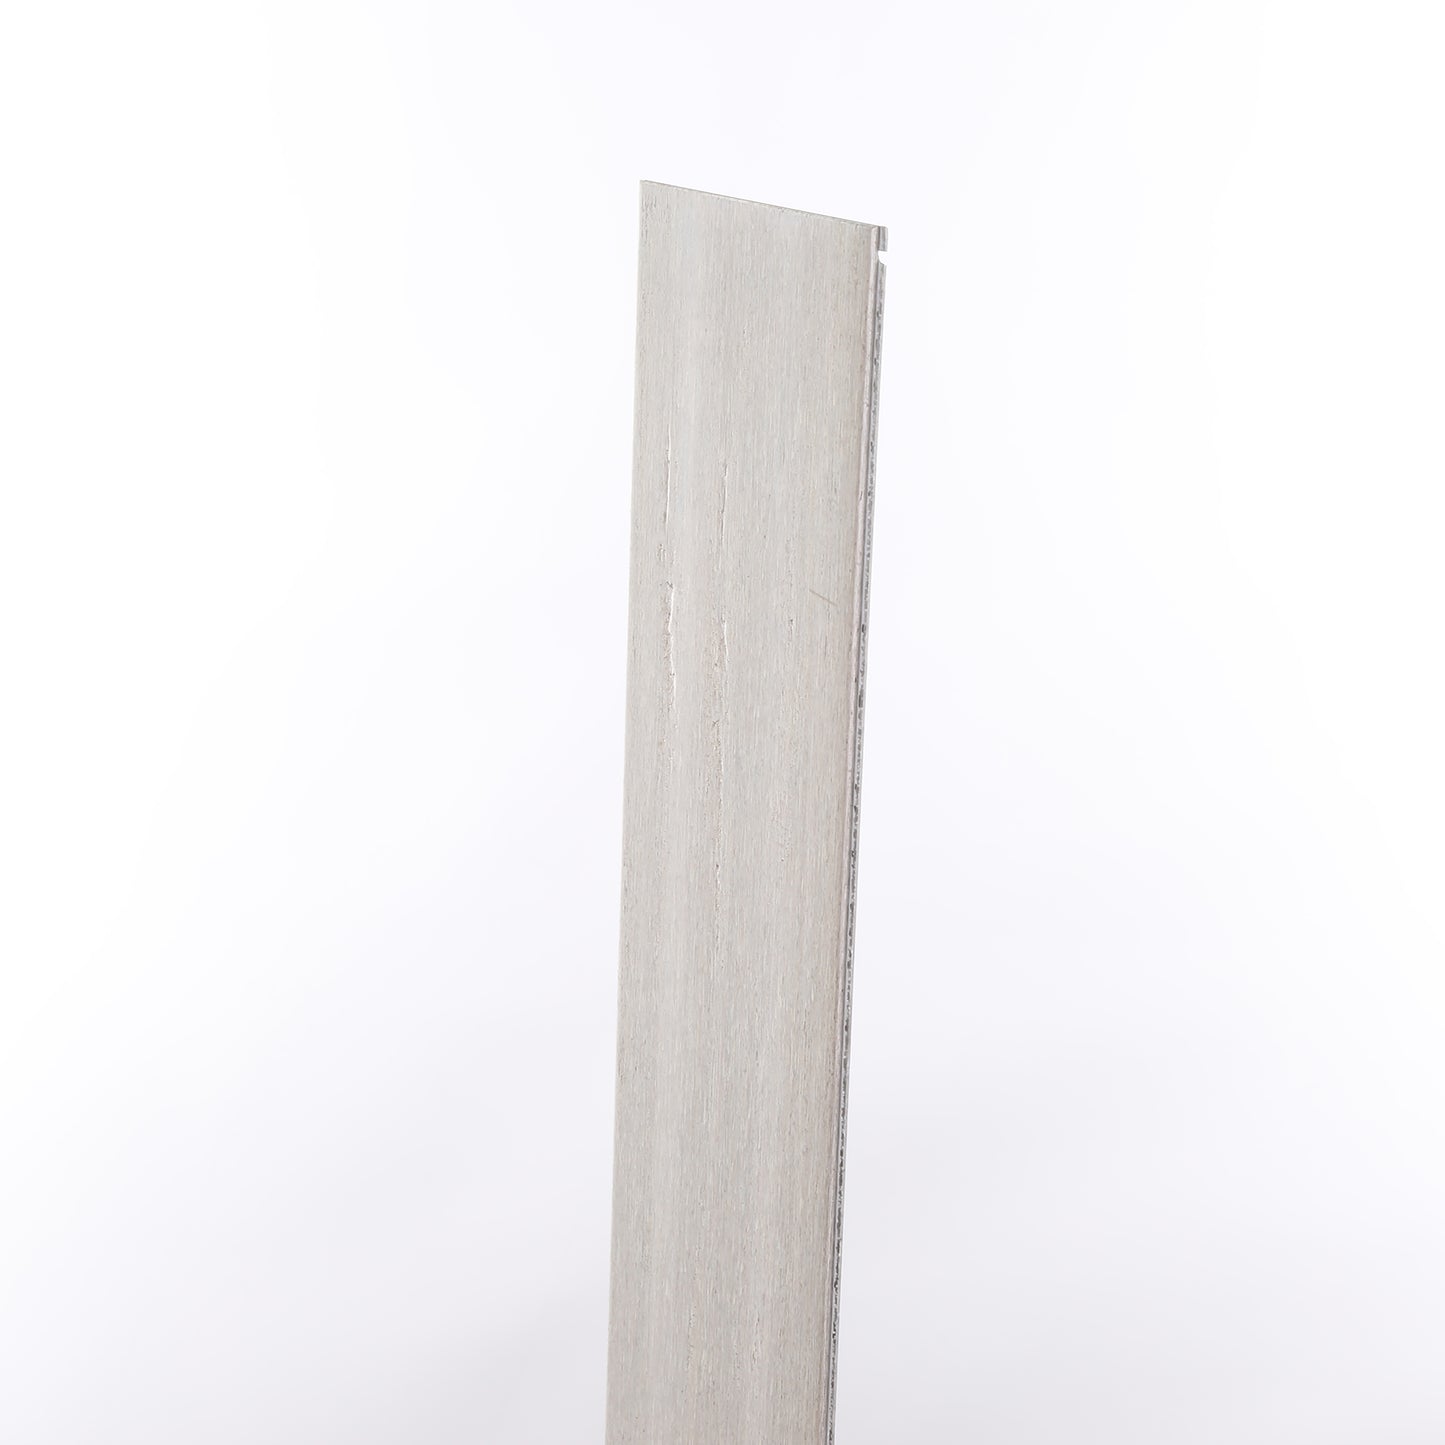 7mm Winter Sky Waterproof Engineered Strand Bamboo Flooring 5.12 in. Wide x 36.22 in. Long